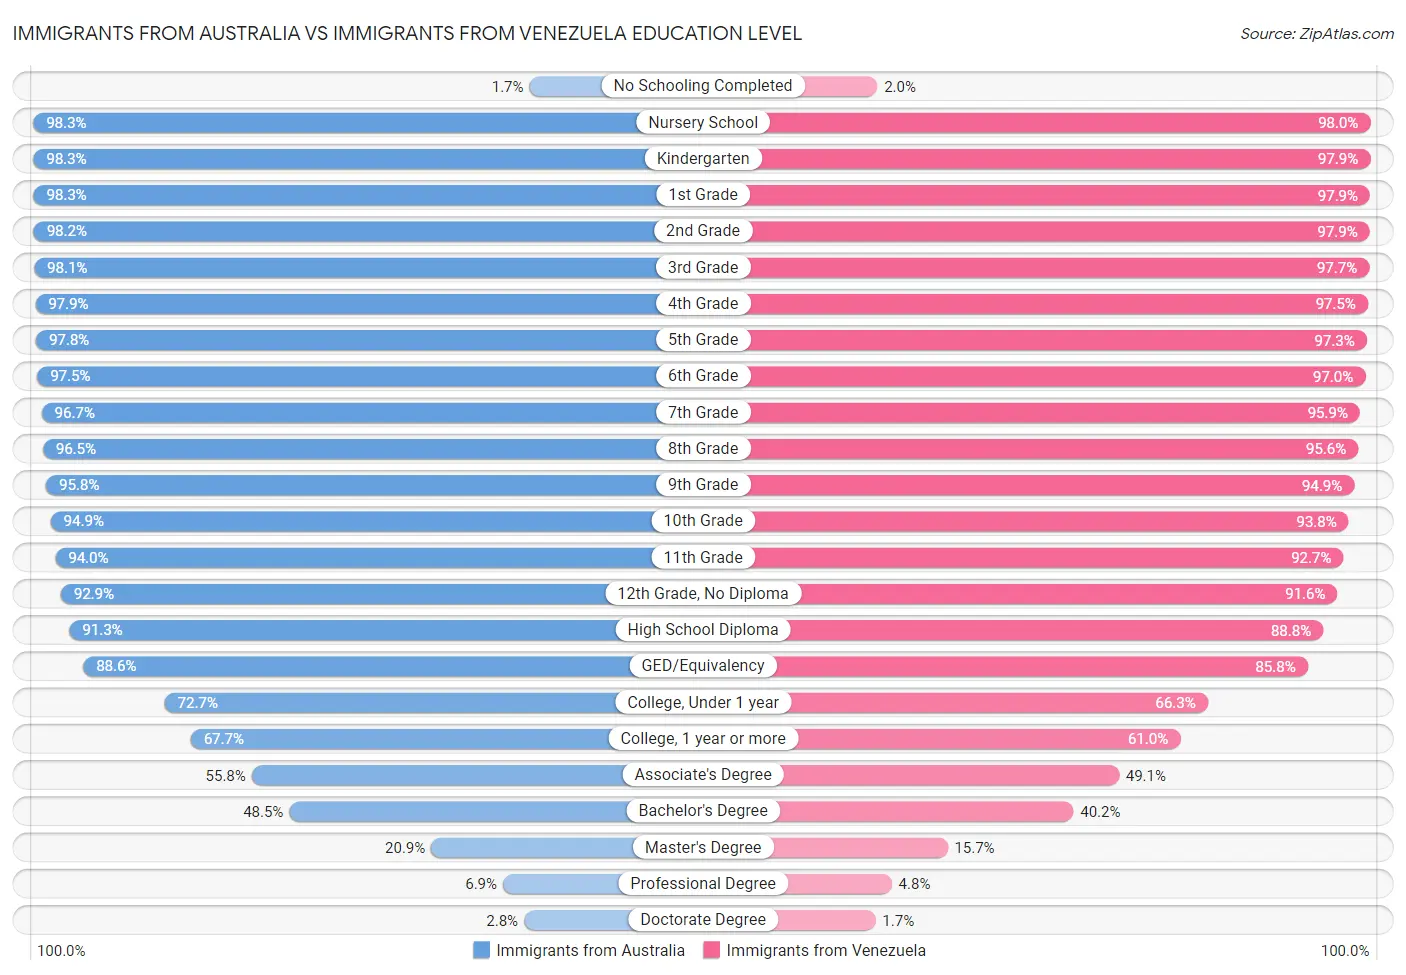 Immigrants from Australia vs Immigrants from Venezuela Education Level